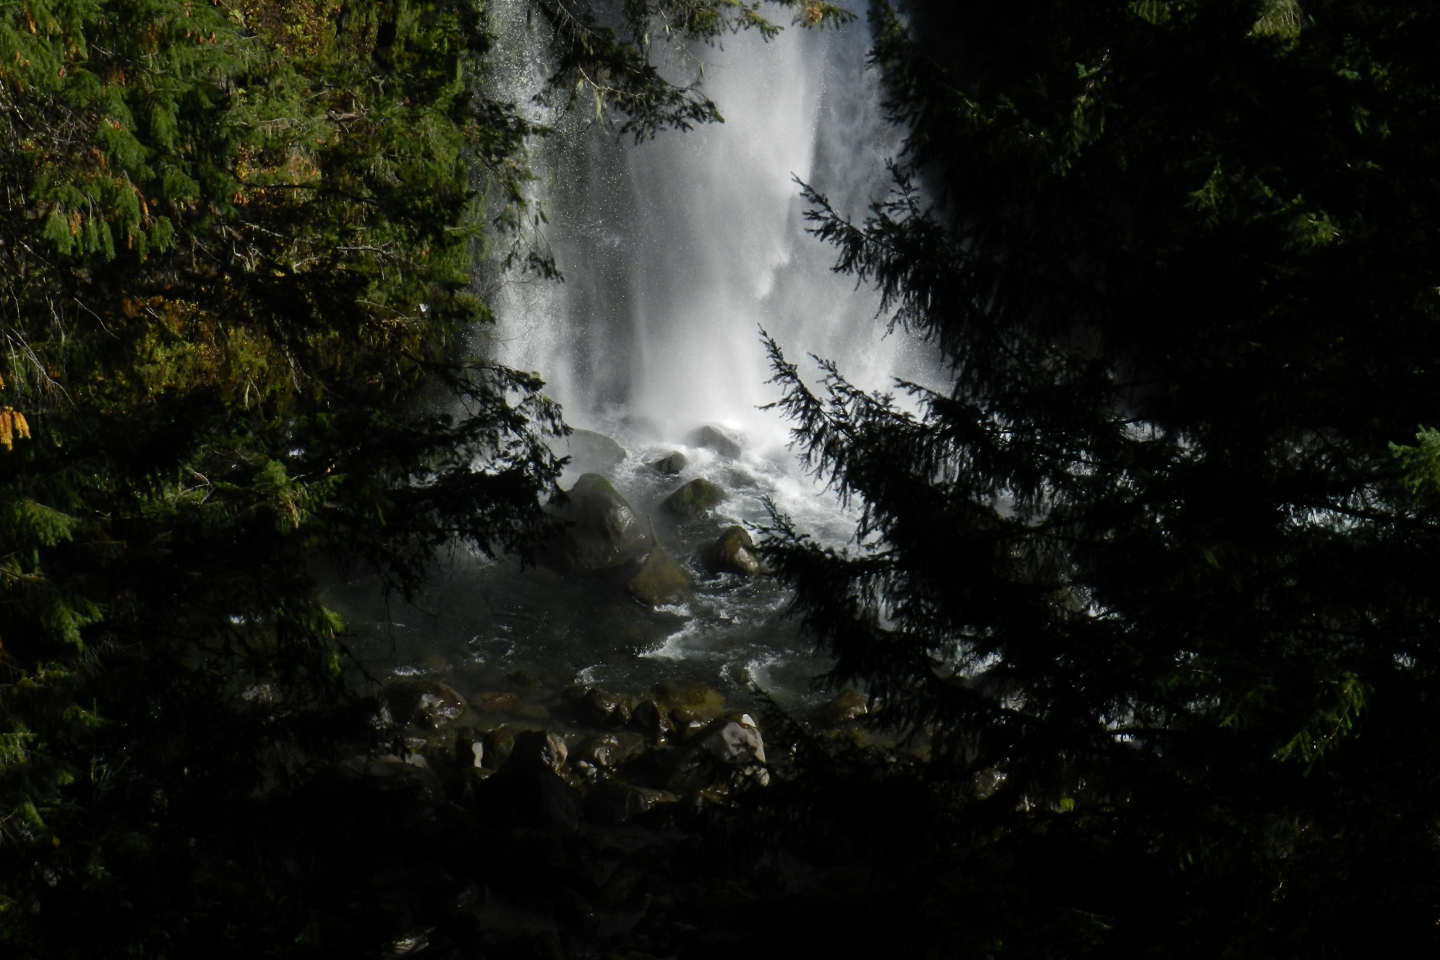 Bottom of the falls